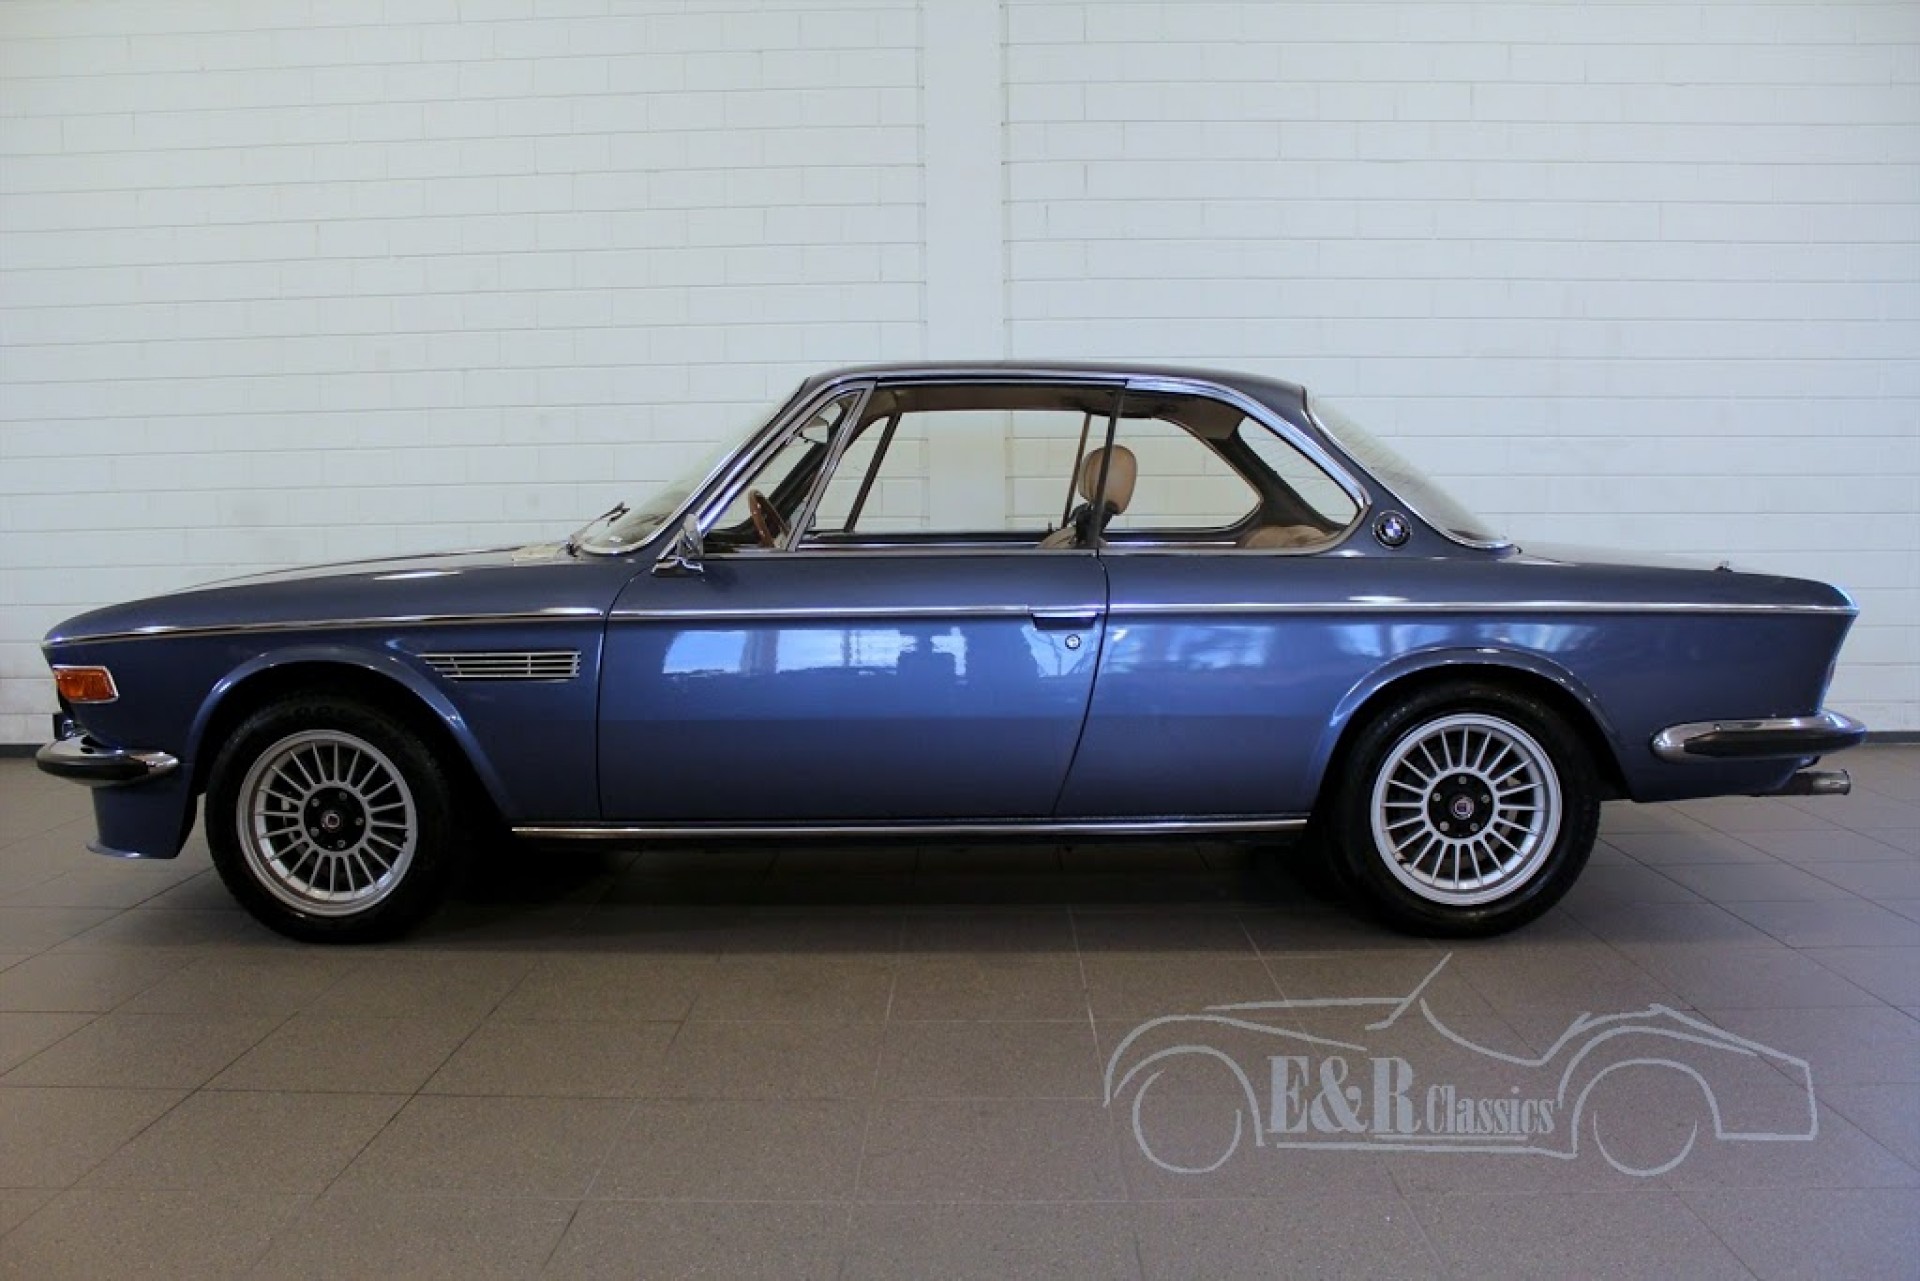 BMW 2800 cs 1970 erclassics 